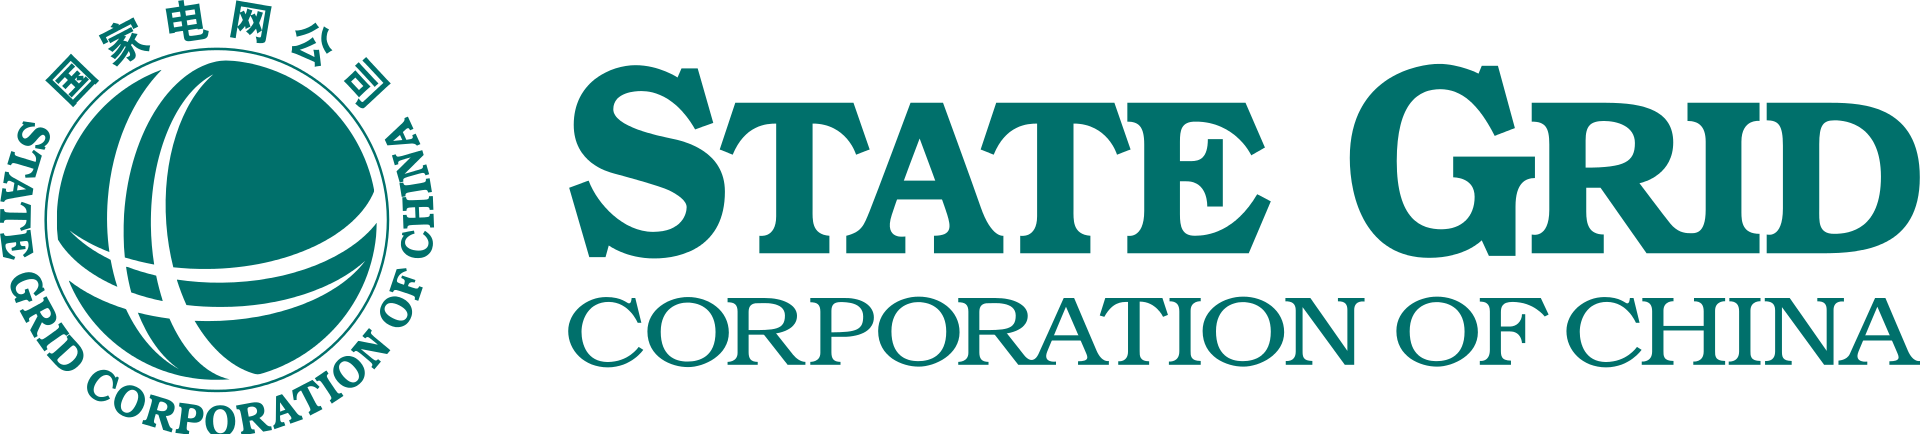 State Grid Corporation of China logo.svg